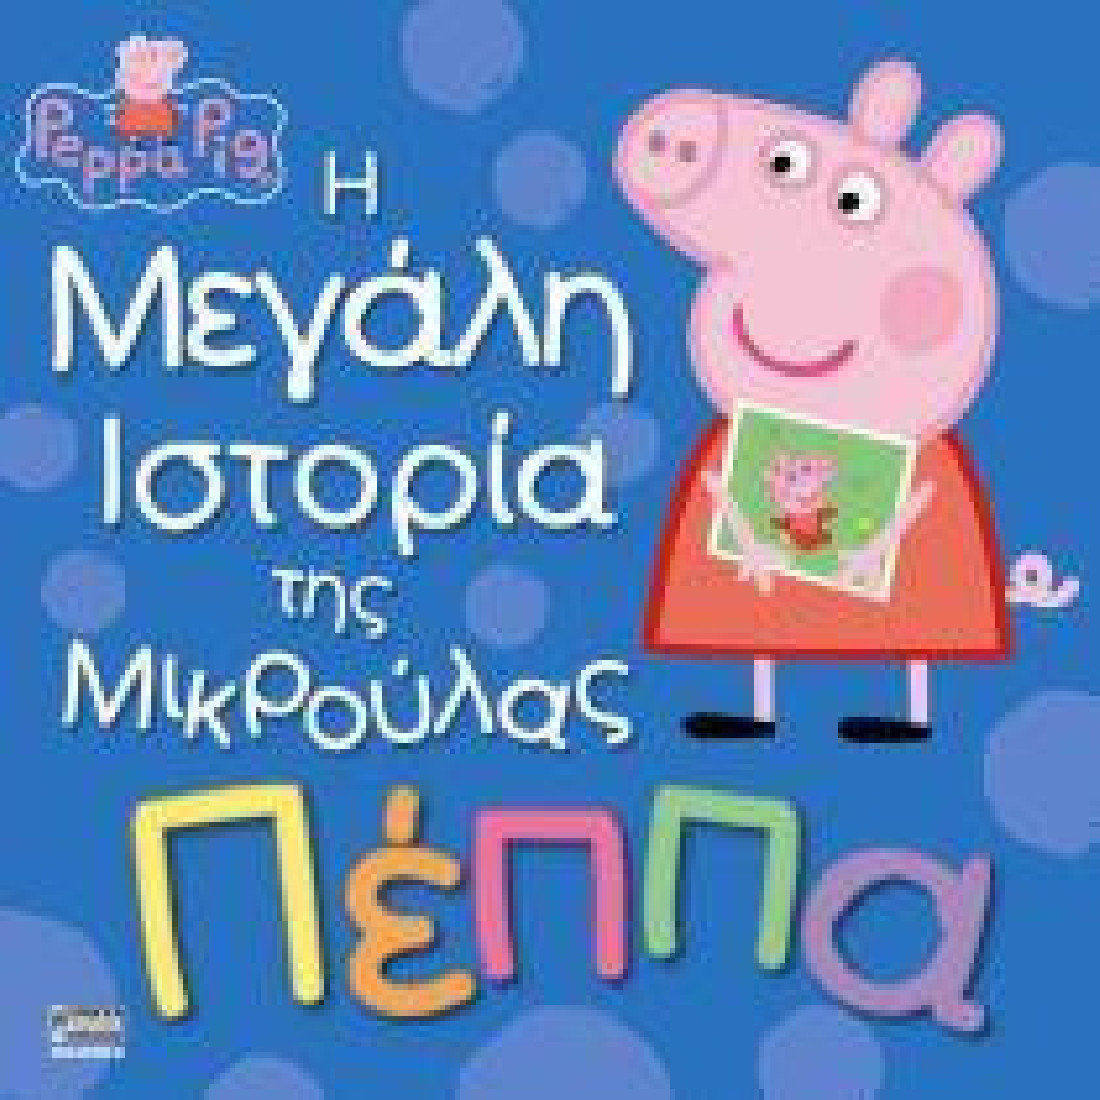 Peppa Pig: Η μεγάλη ιστορία της μικρούλας Πέππα